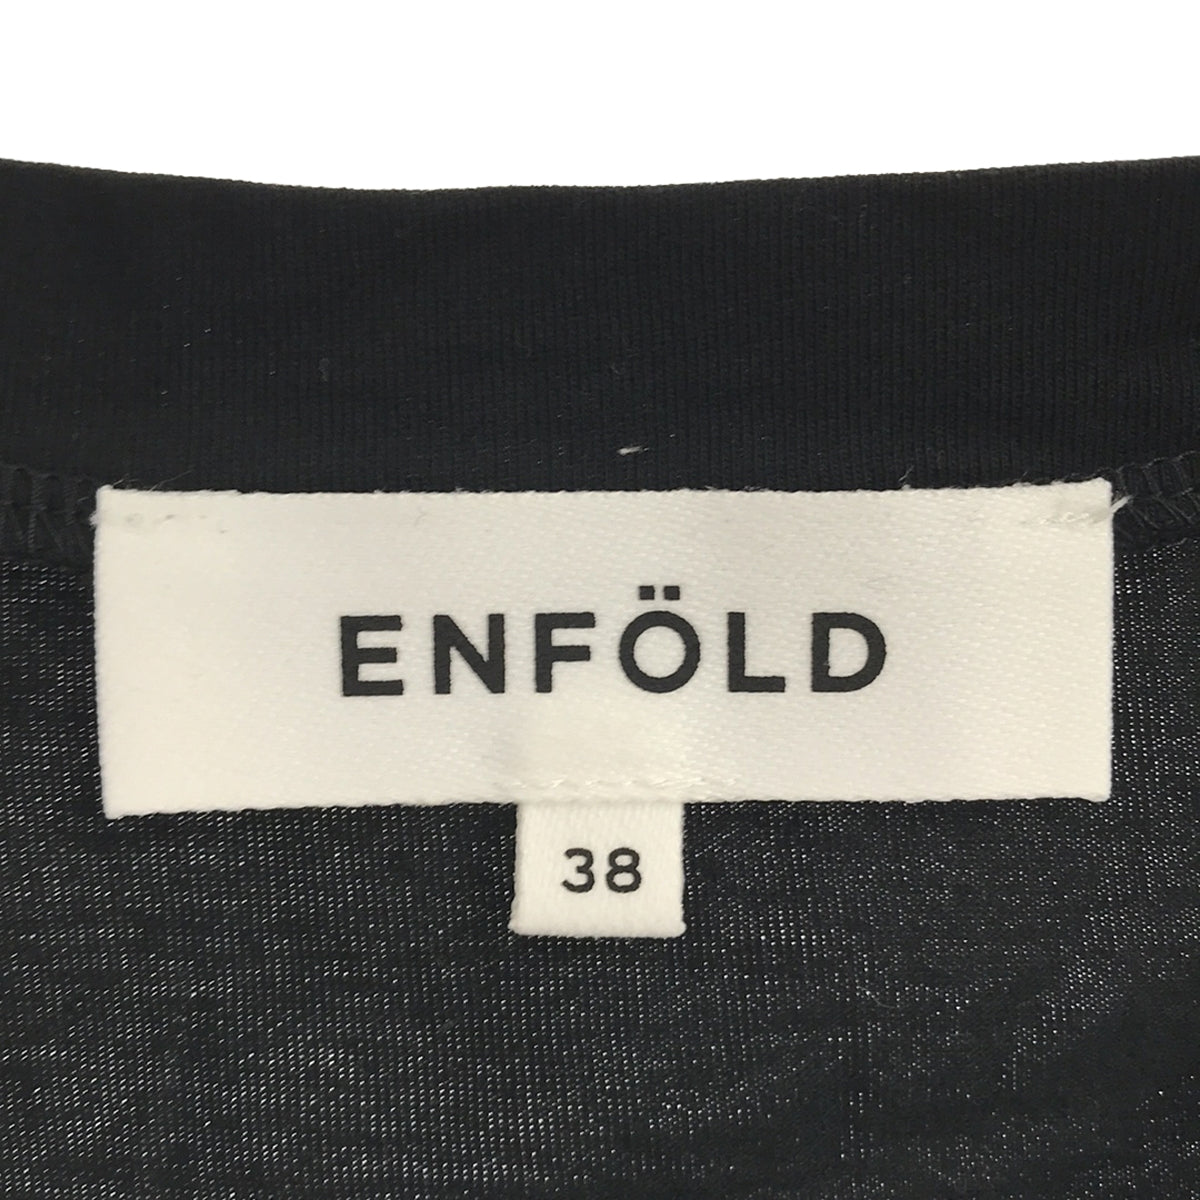 ENFOLD / エンフォルド | ハイカウントコットン アシンメトリータンクトップ ノースリーブカットソー | 38 | レディース